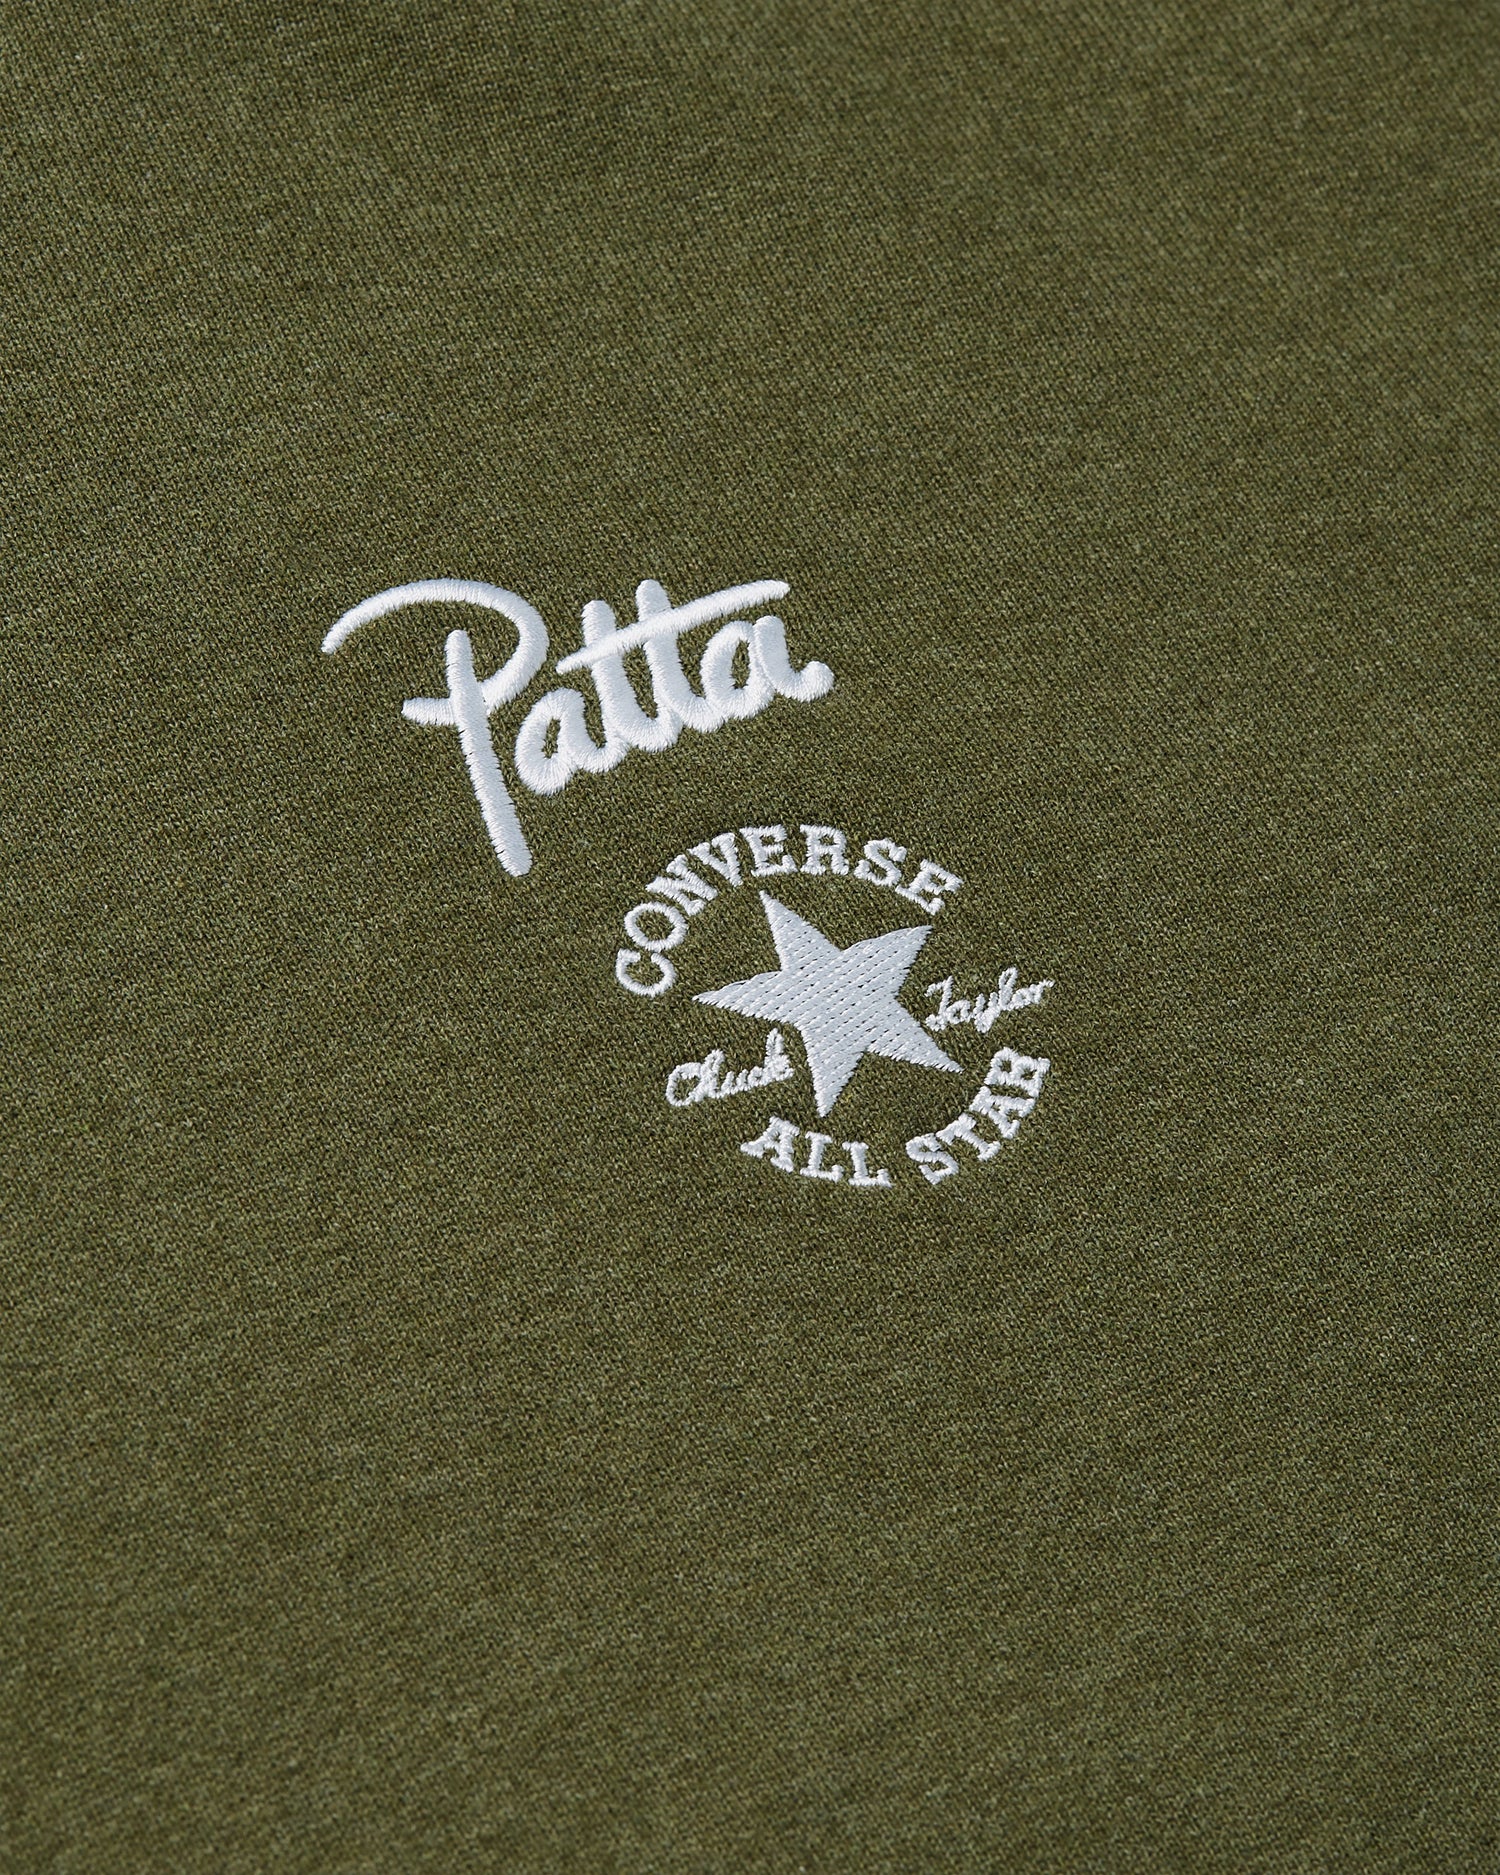 Patta x Converse Rain or Shine Hooded Sweater (Utility Green Heather)